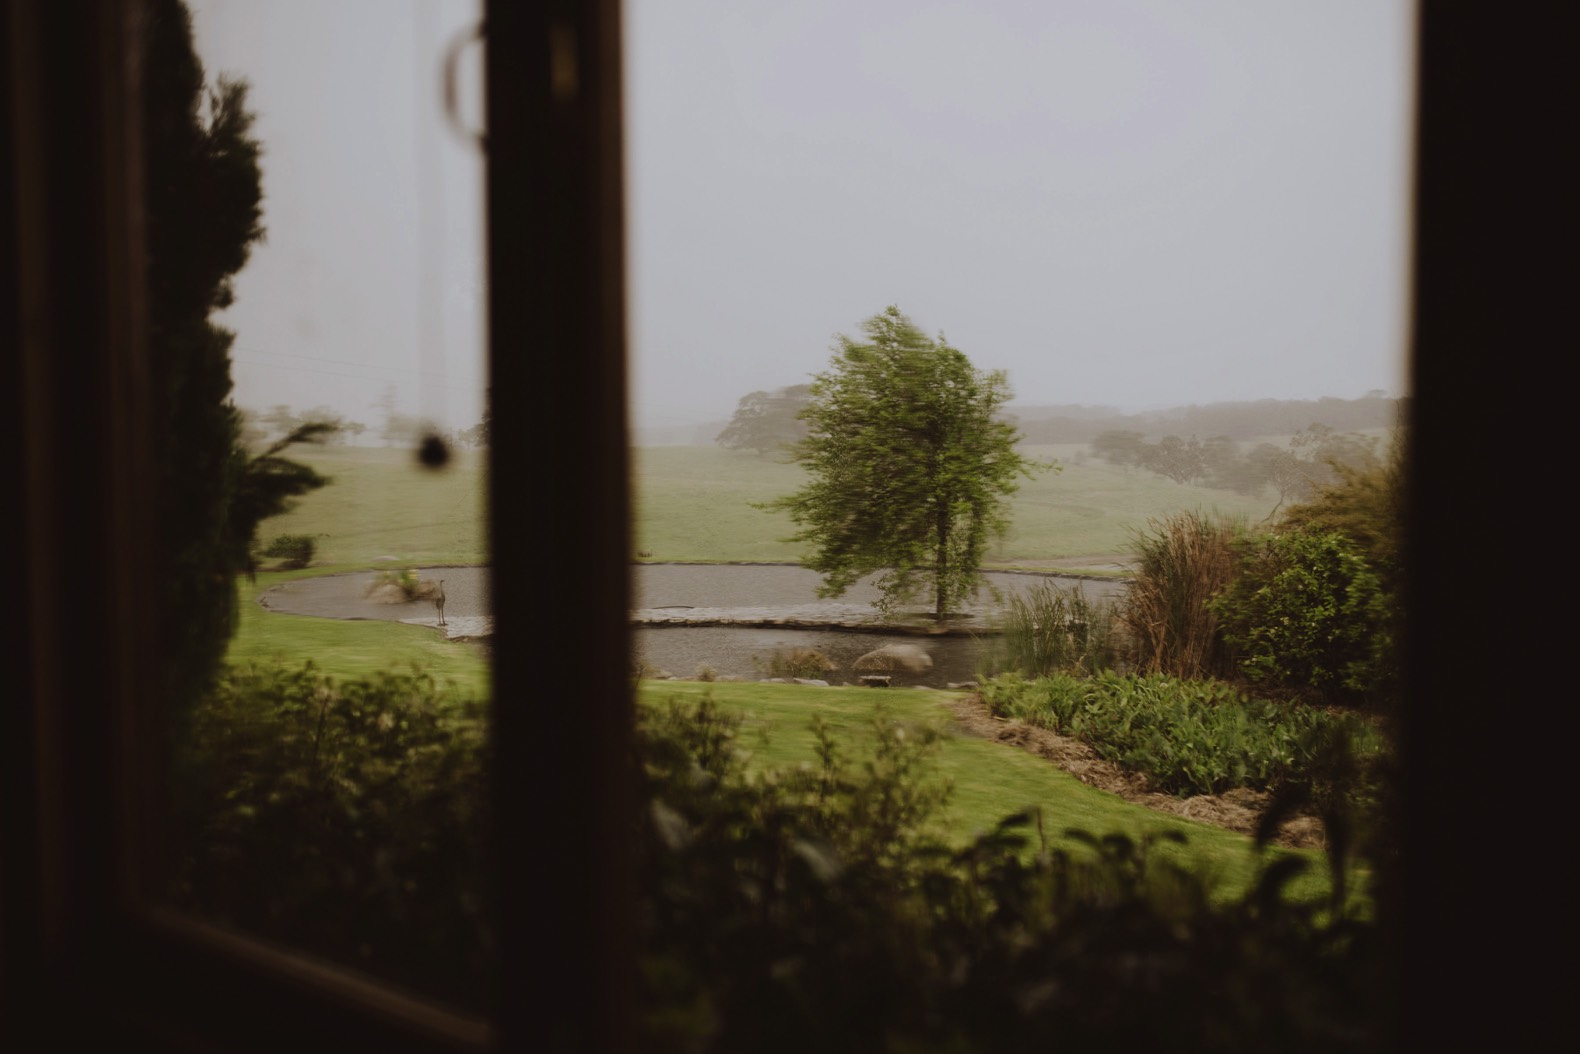 thornbury lodge stanthorpe photo out the window of rainy weather